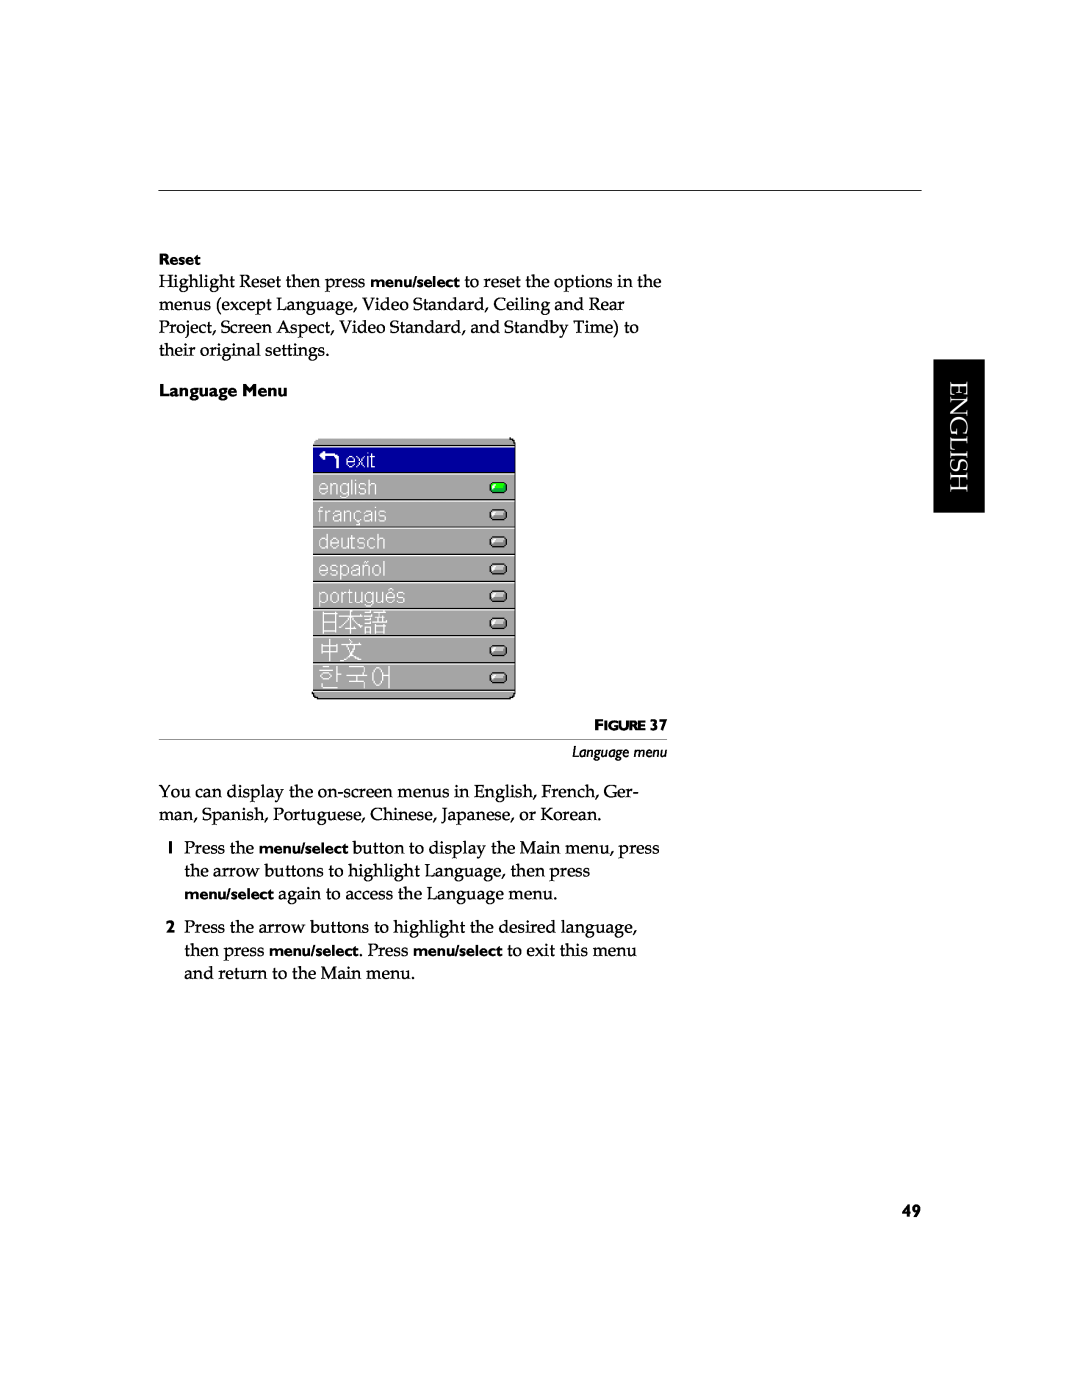 InFocus LS110 manual Wkhluruljlqdovhwwlqjv, 1*/,6+, Language Menu, Reset, Language menu 